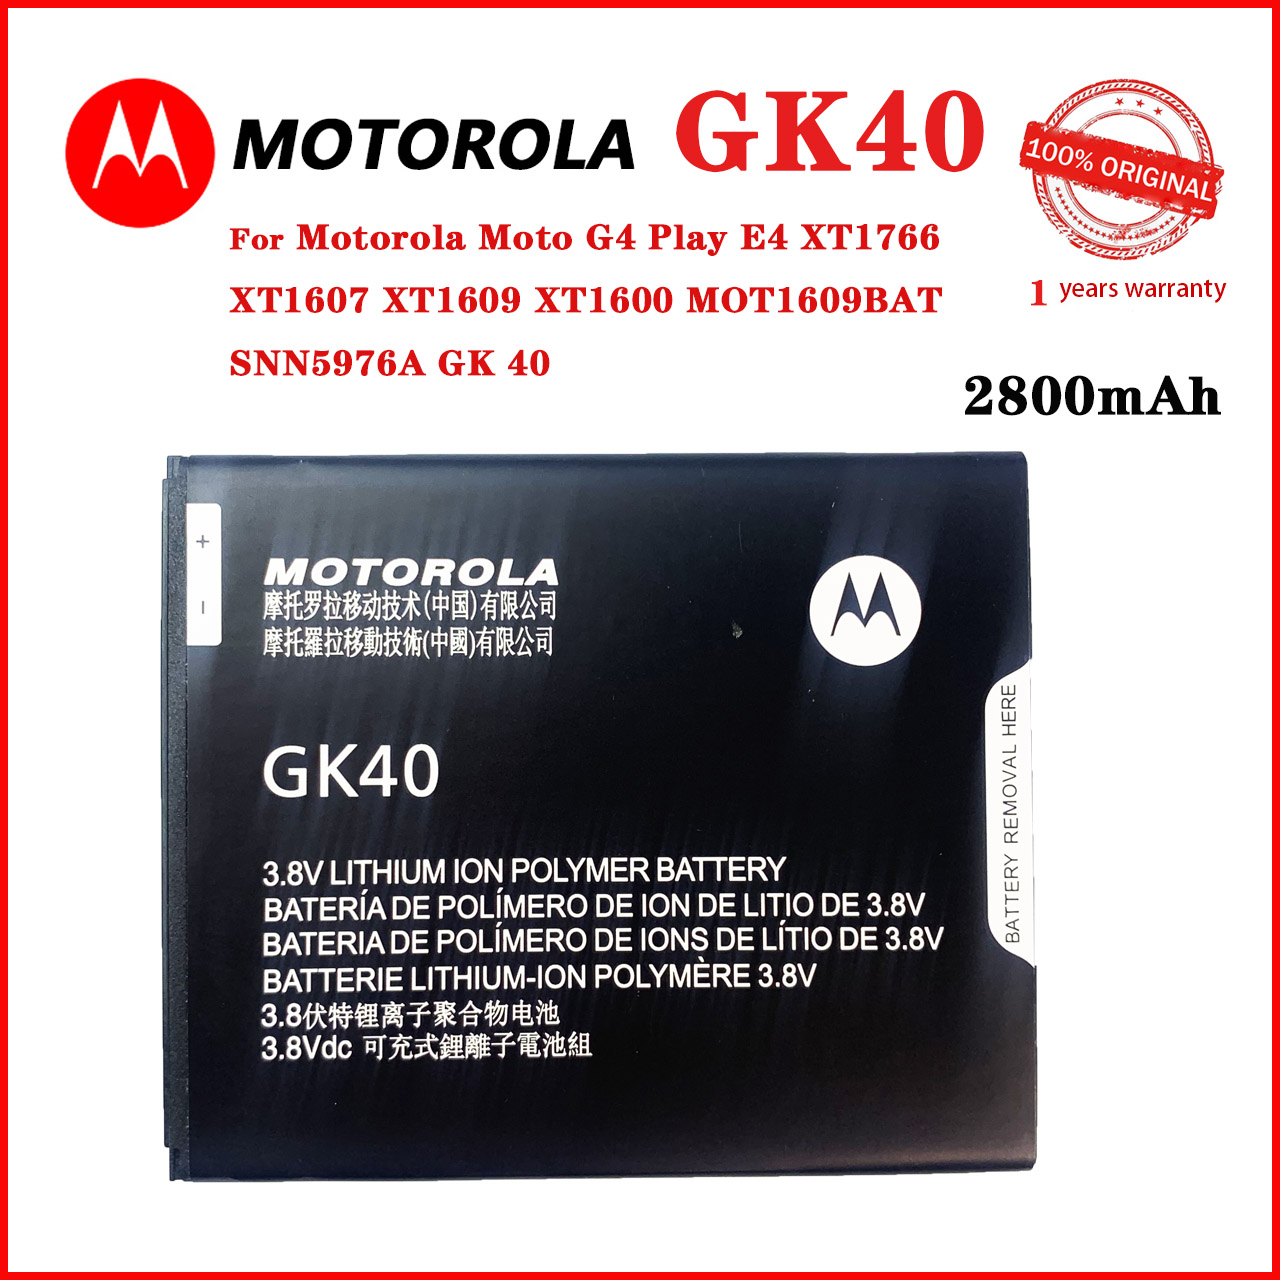 MOTOROLA GK40 GENUINE Original Battery Moto G4 G Play XT1607